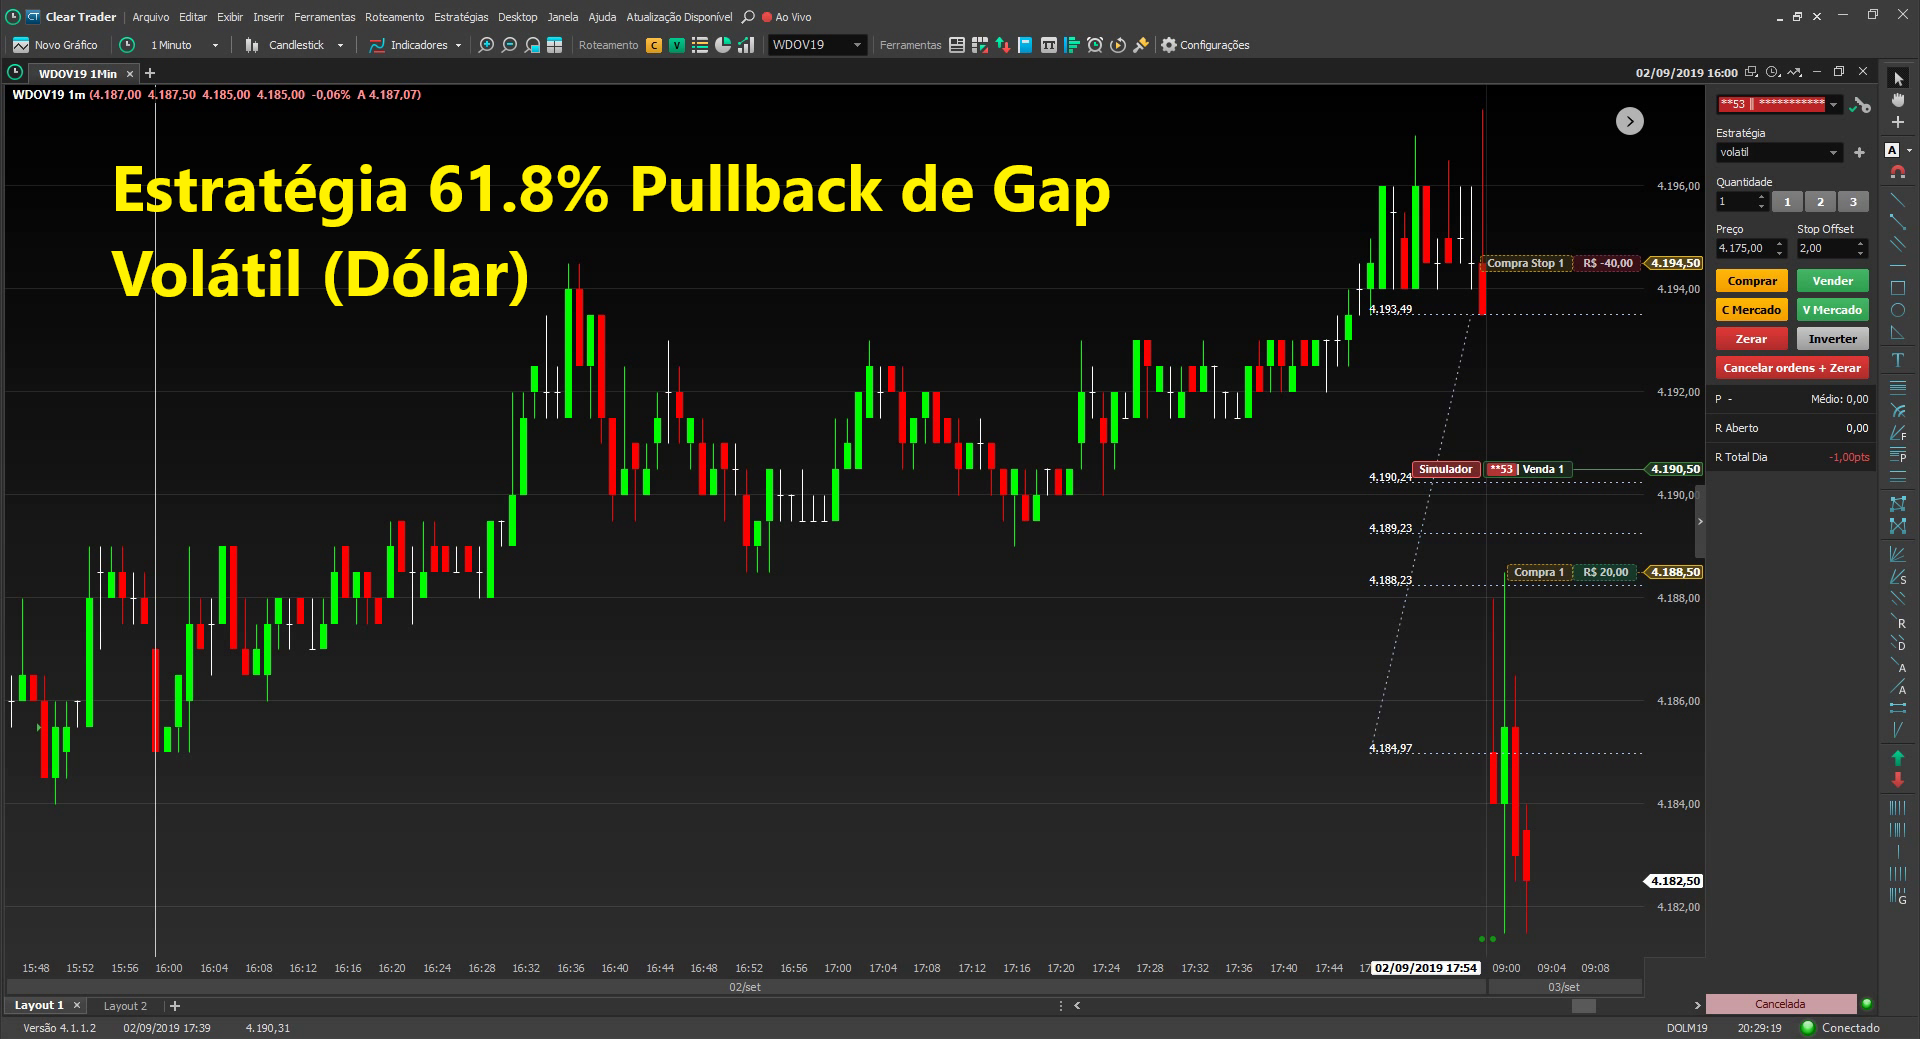 Estratégia 61.8% Pullback de Gap Volátil (Dólar)